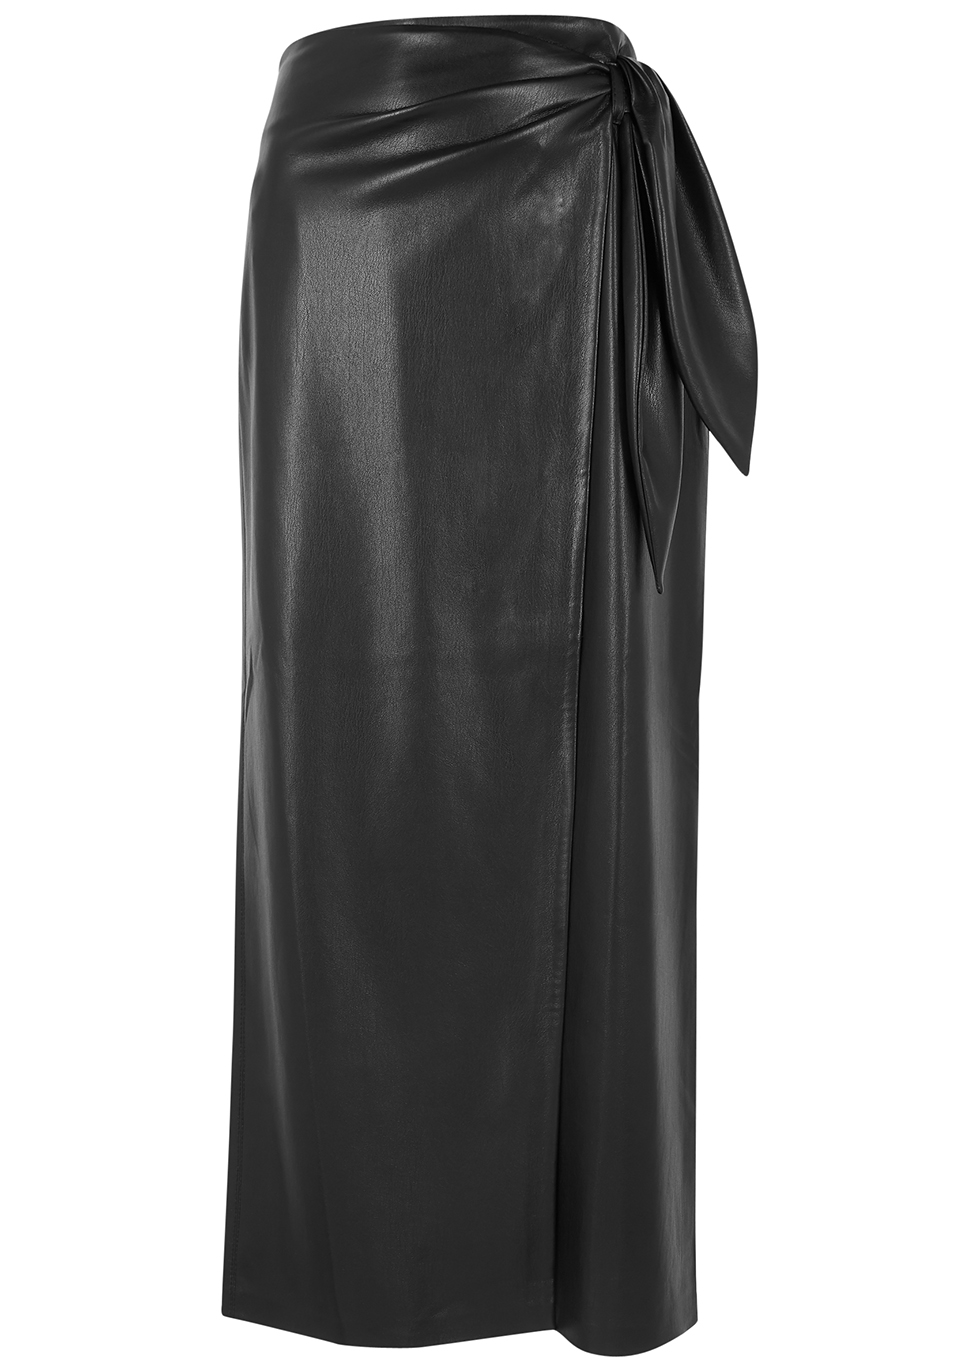 Amas black faux leather midi skirt